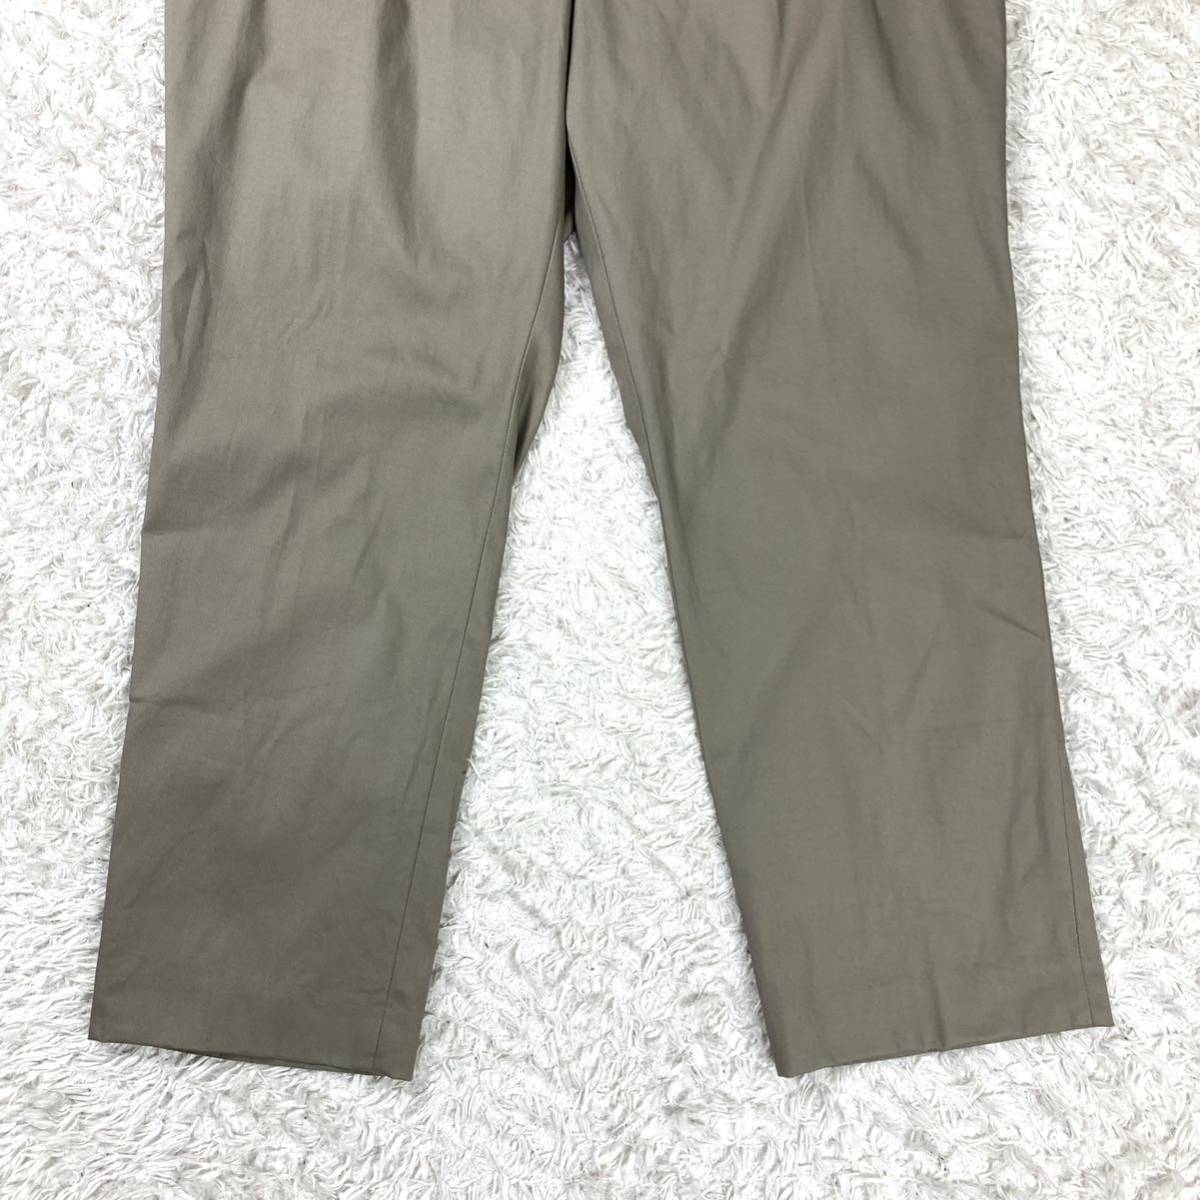  Untitled tapered pants slacks beige large size 48 YA5393